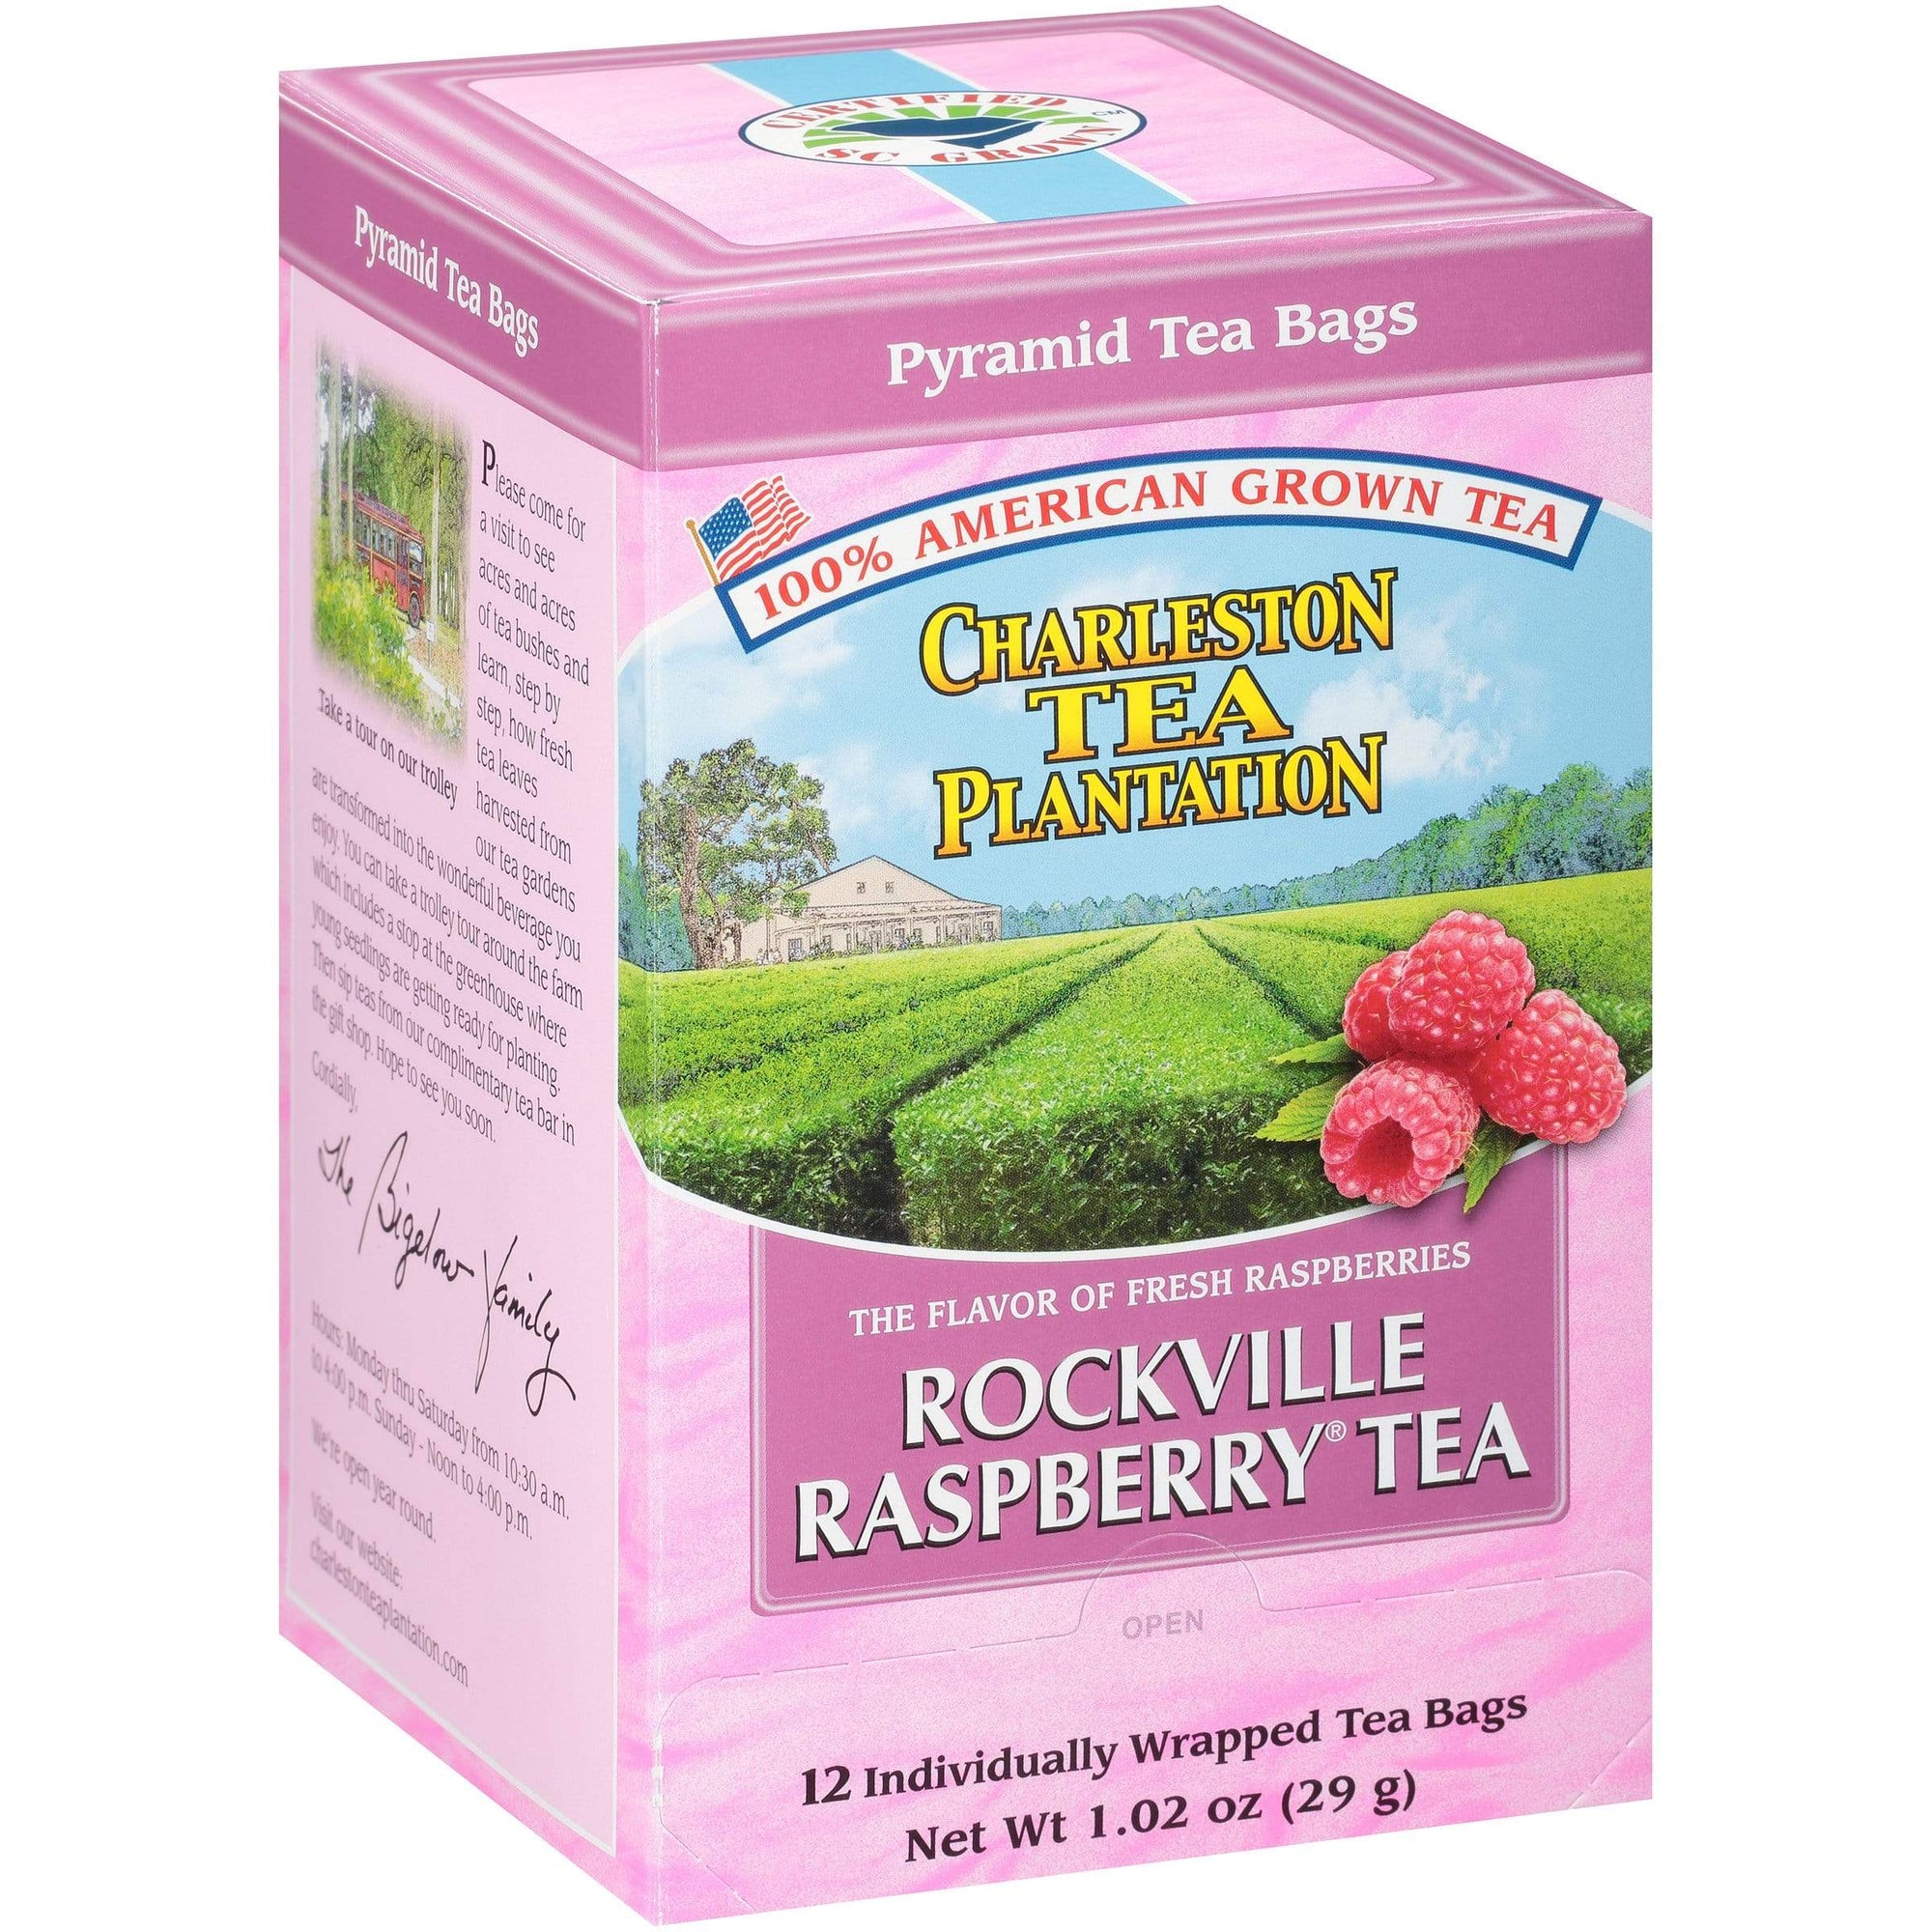 Charleston Tea Plantation Rockville Raspberry Tea (100% American)-VIVA Scandinavia